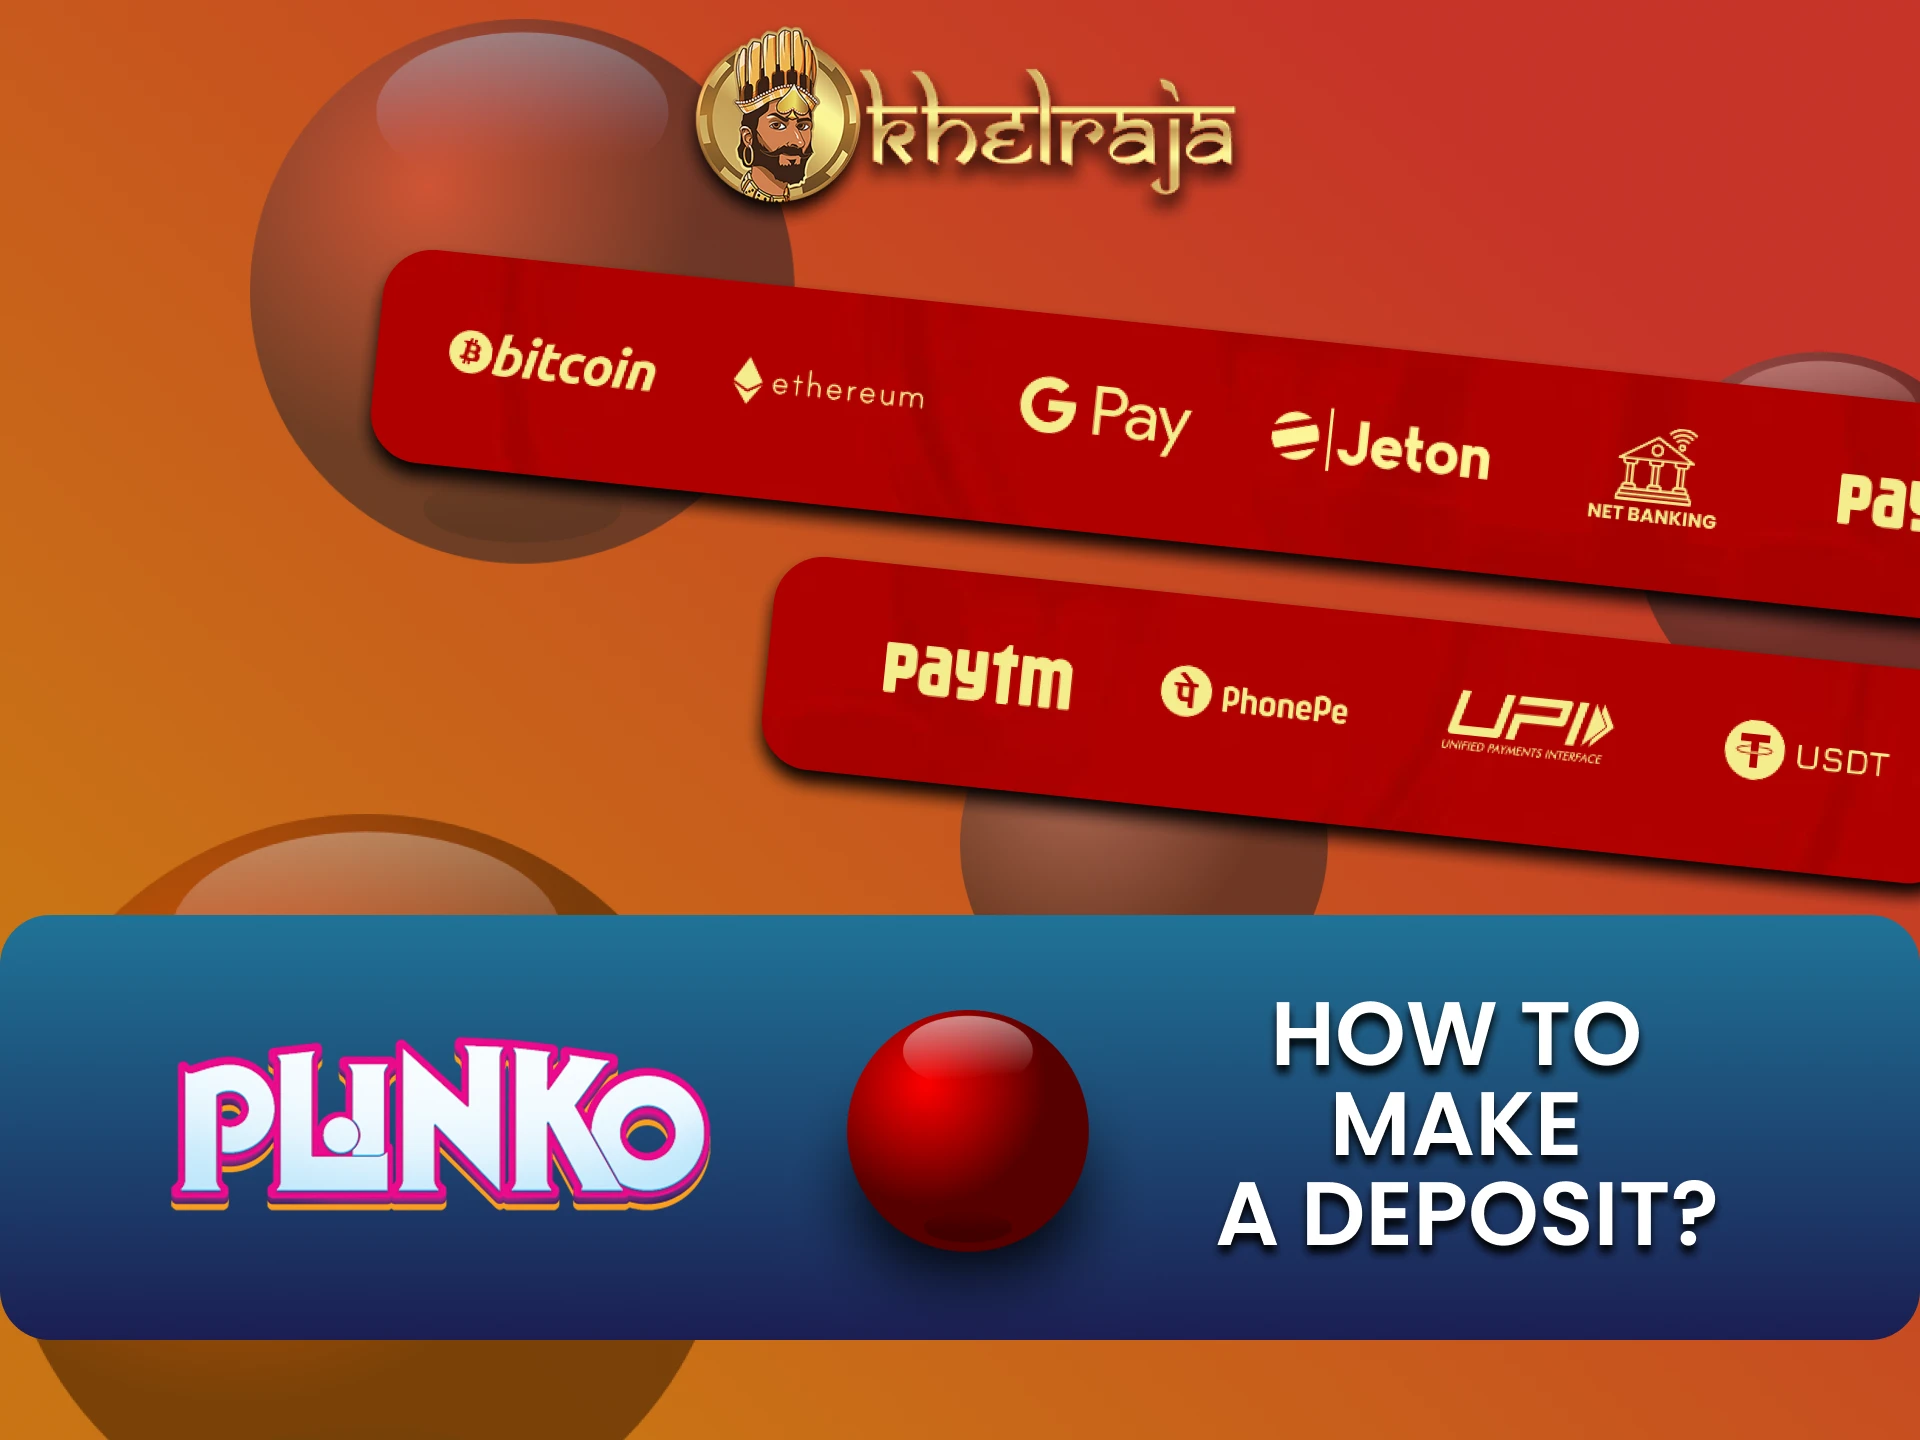 Choose your method of replenishing funds on Khelraja for the game Plinko.